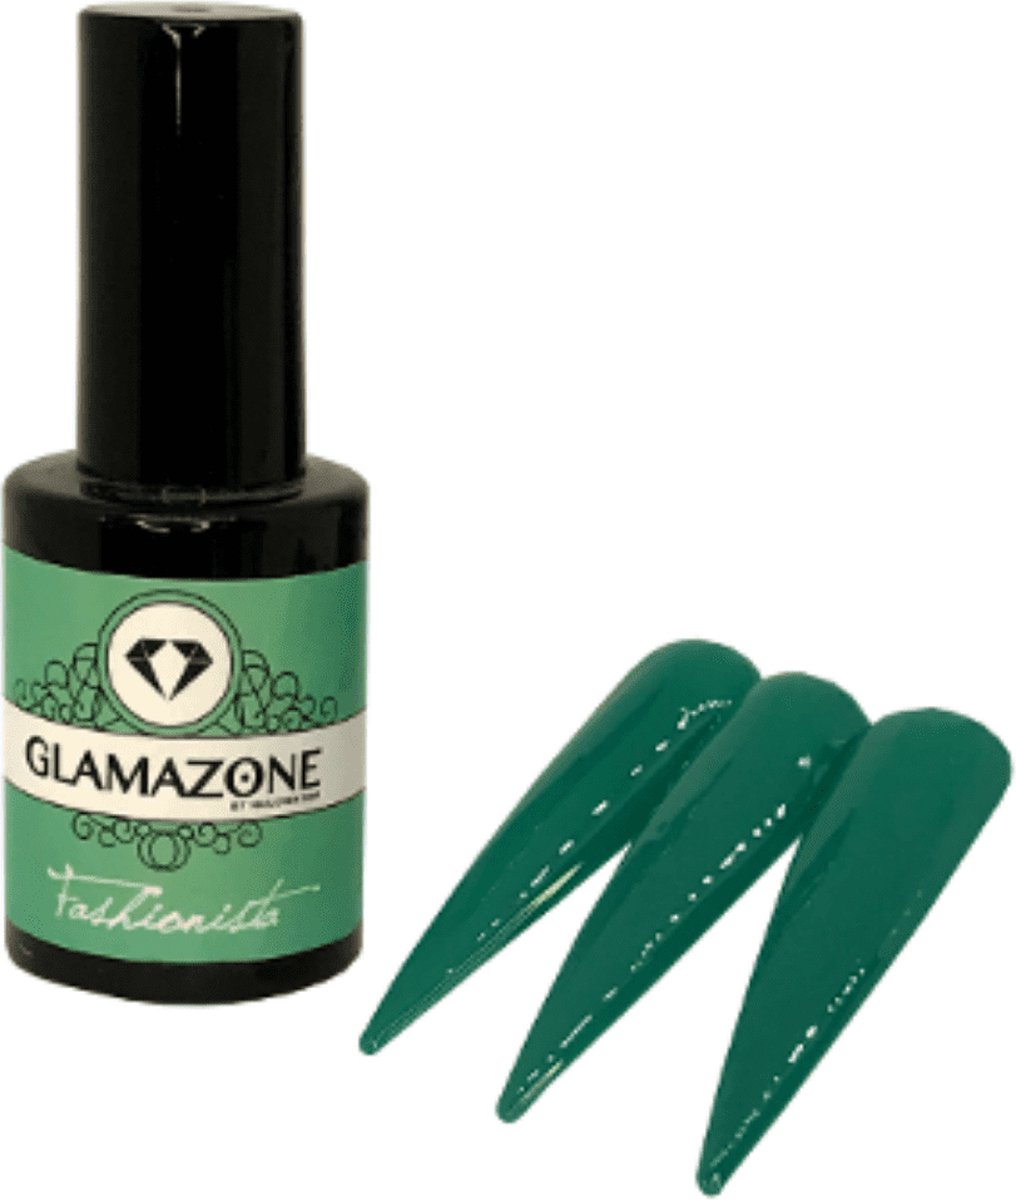 Nail Creation Glamazone - Fashionista